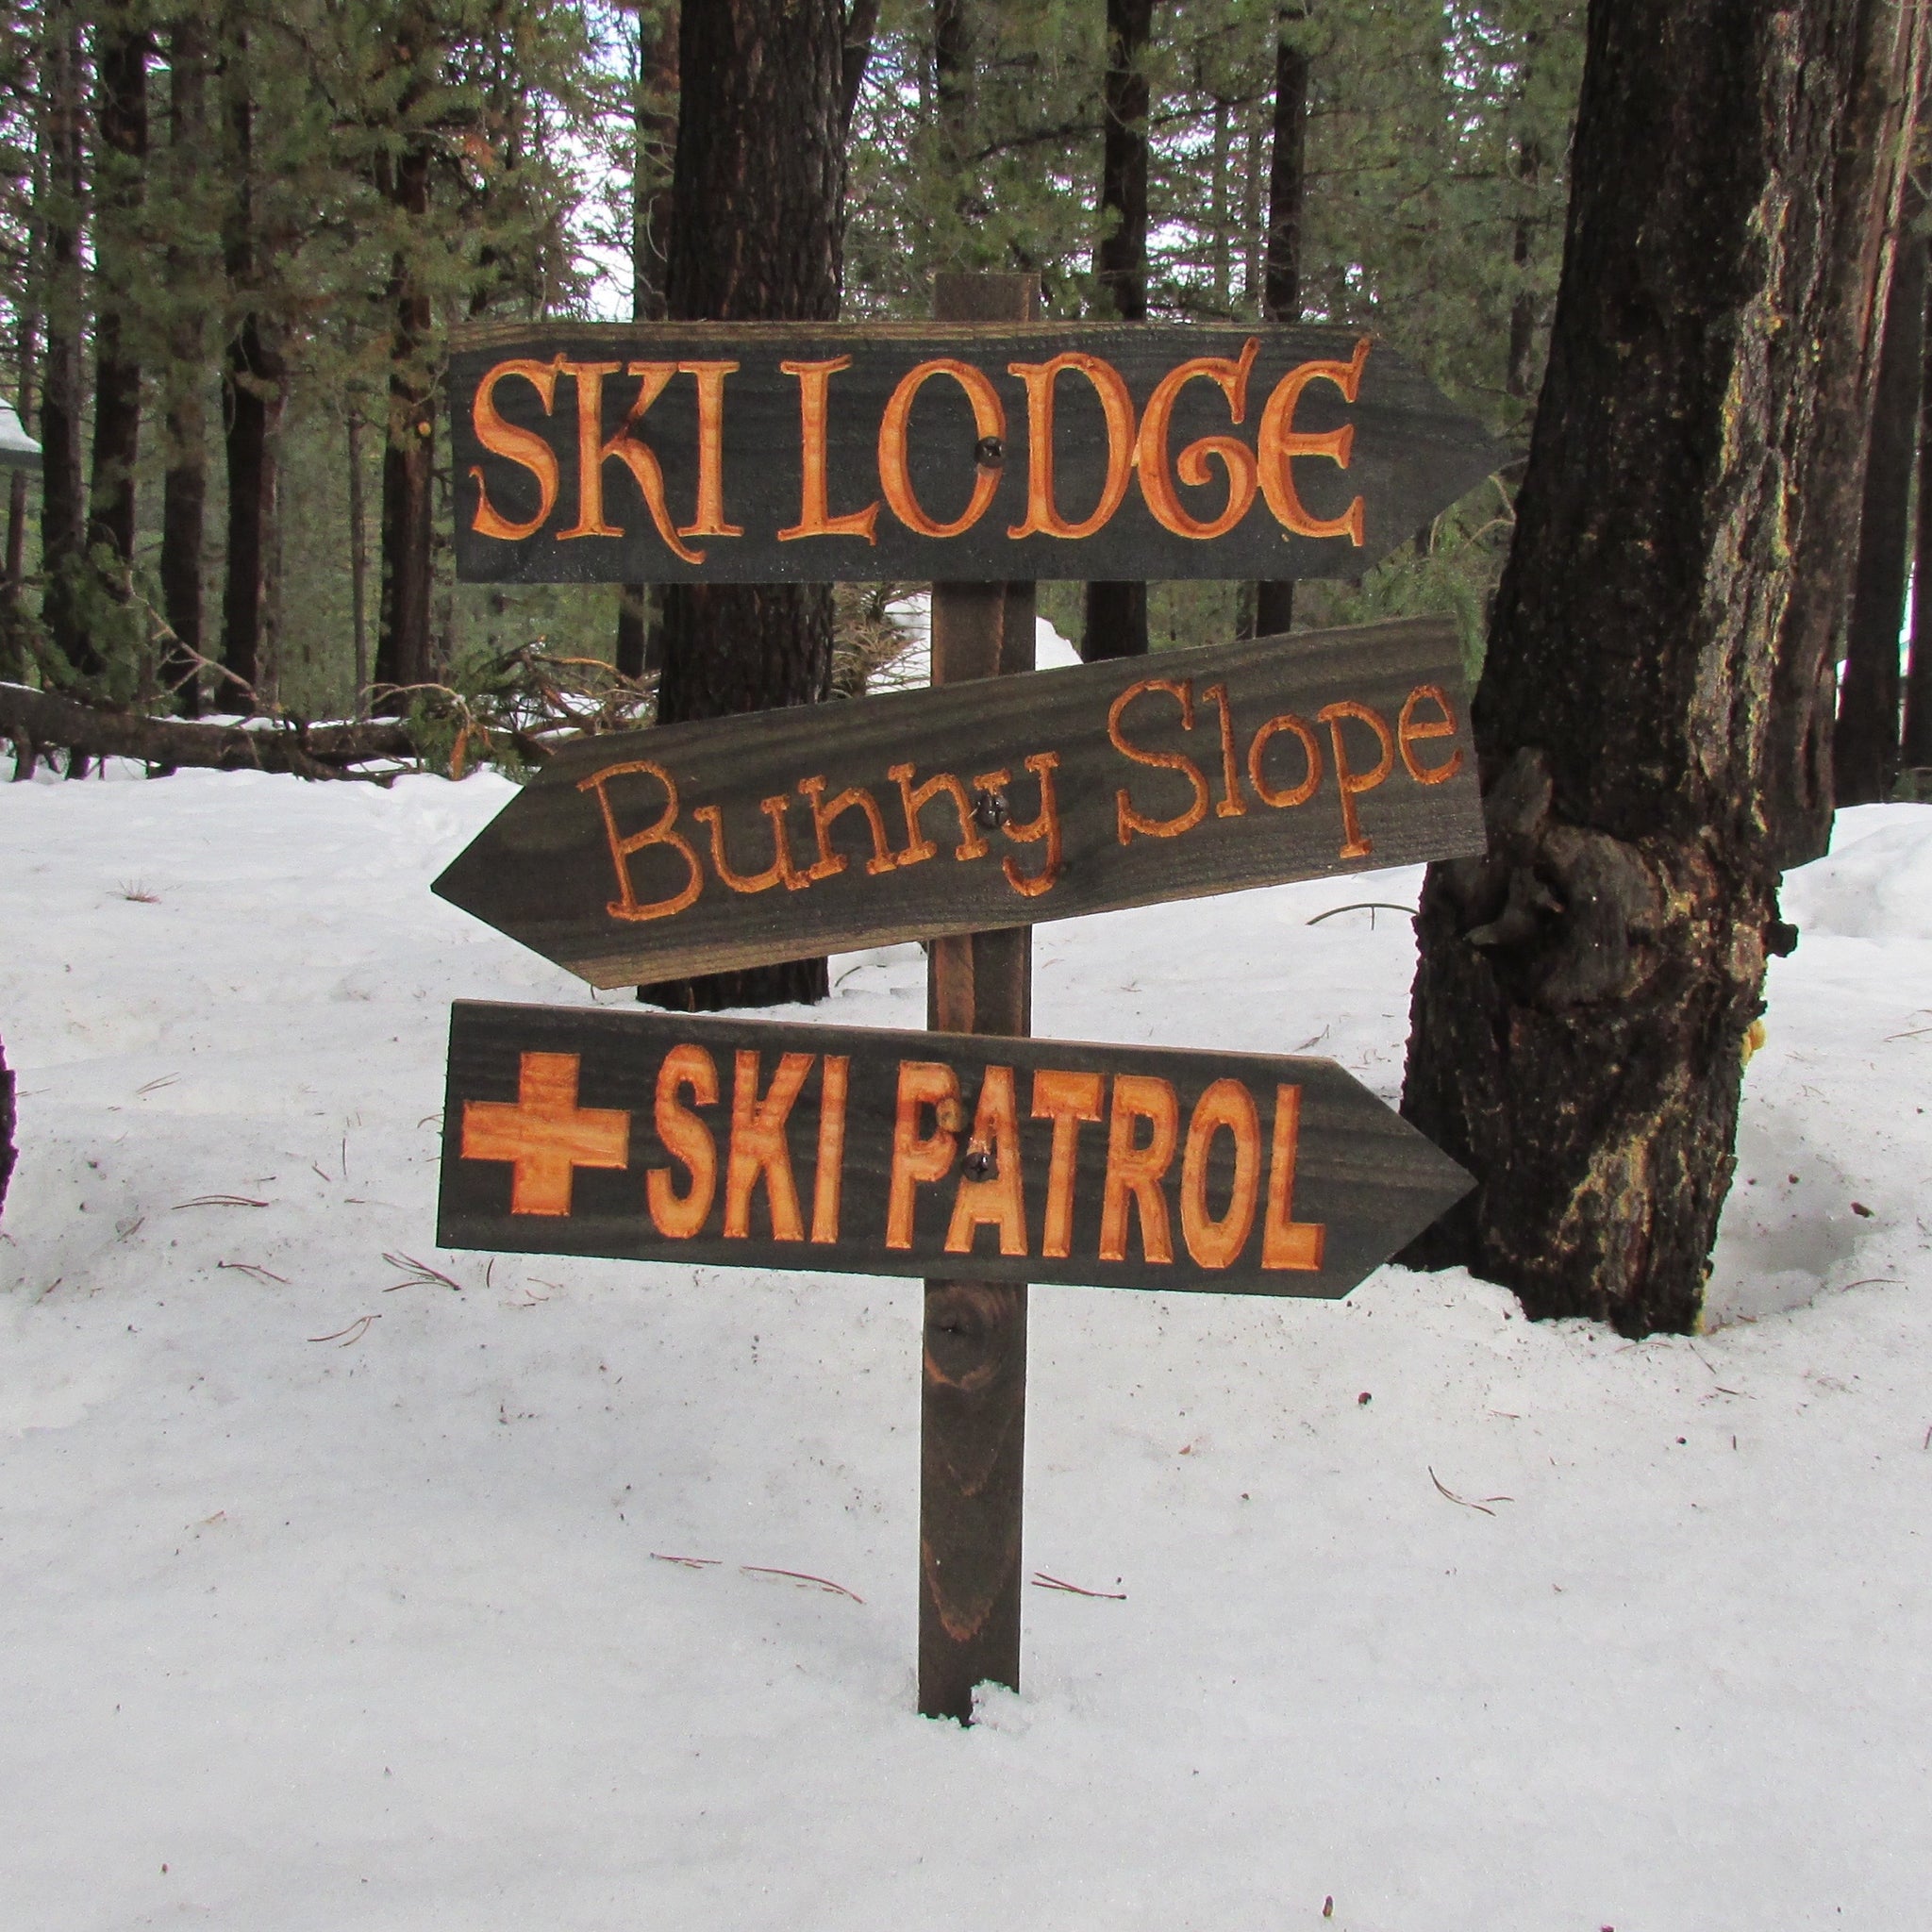 Ski Lodge Patrol Bunny Slope Directional Lawn Ornament Sign - Carved Cedar Wood